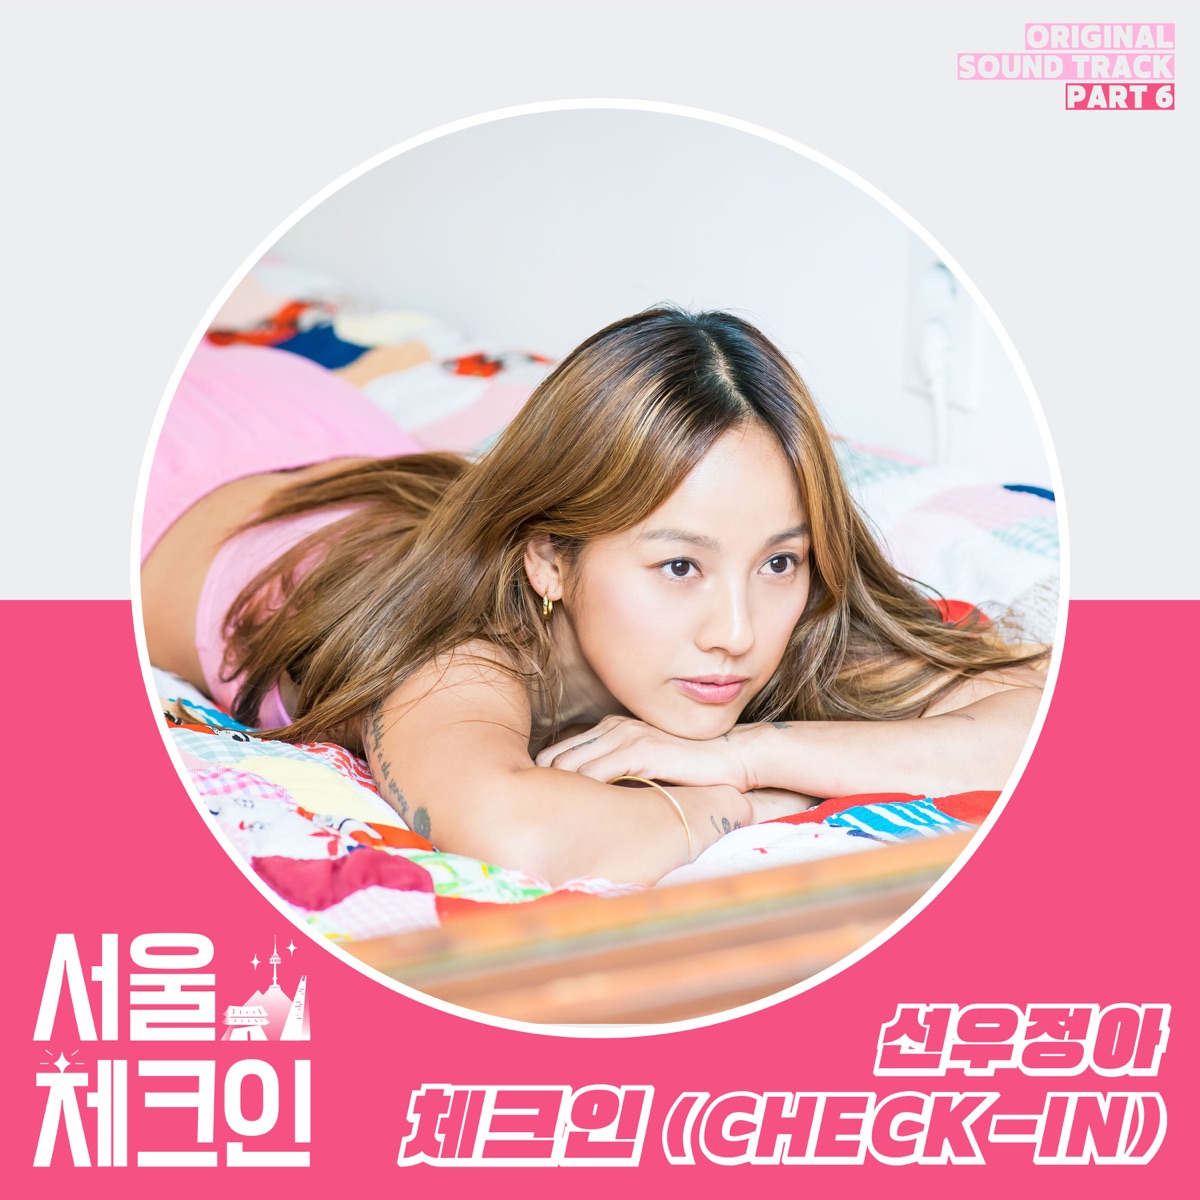 sunwoojunga – Seoul Check-in OST Part 6